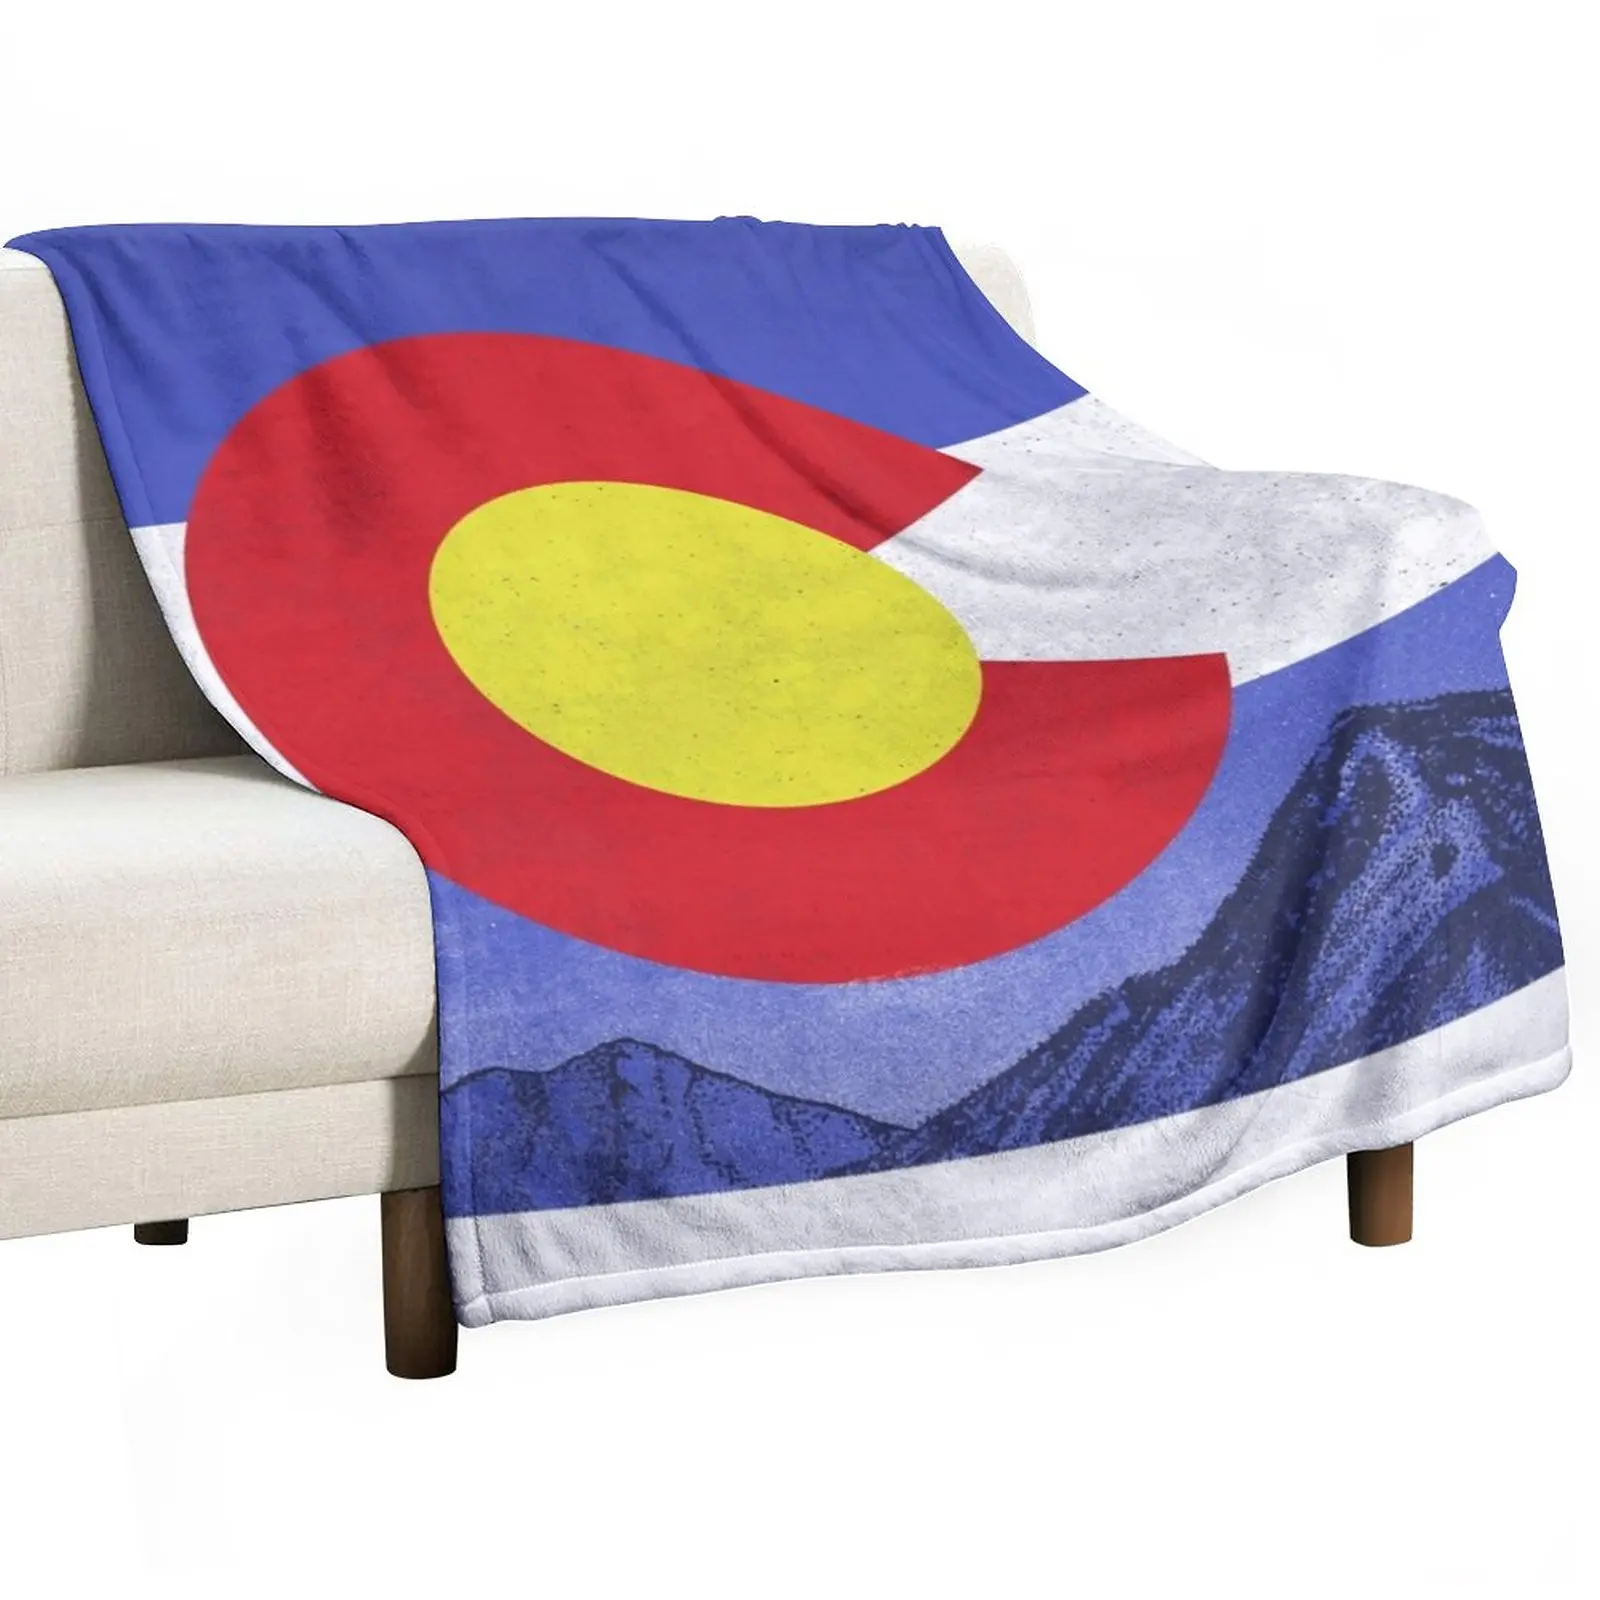 

vintage colorado flag Throw Blanket Plaid on the sofa Nap Blanket blankets and throws